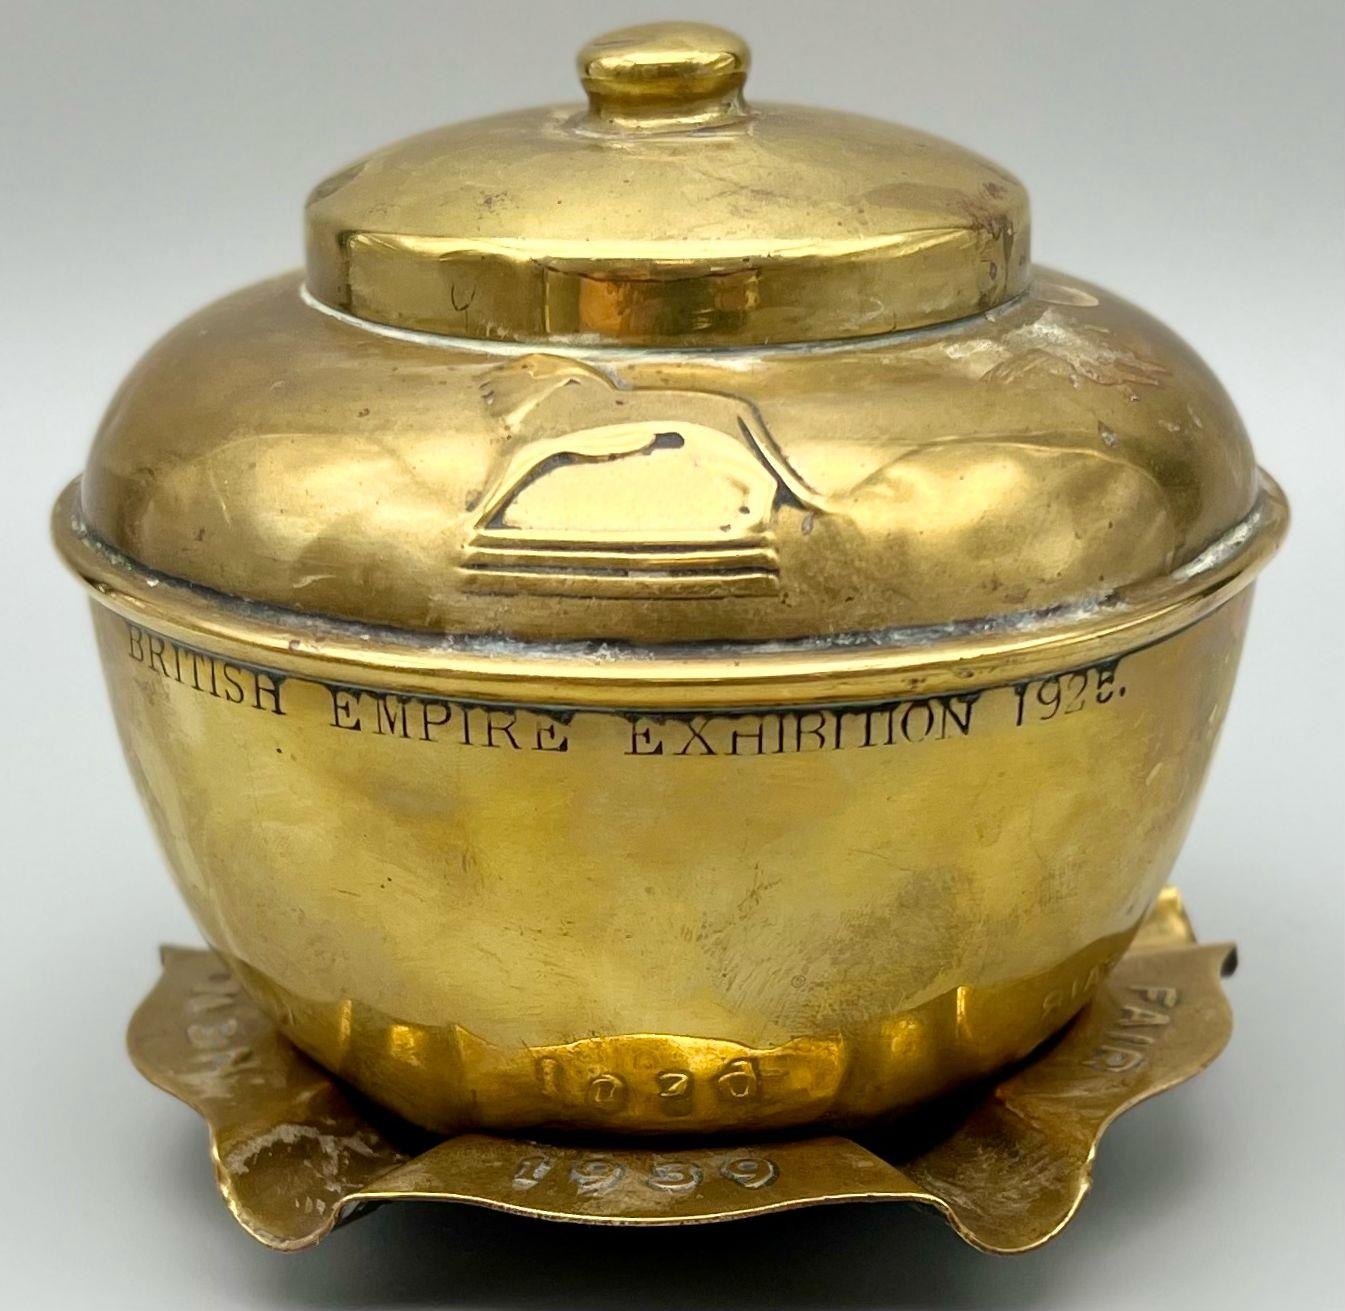 A 1939 Brass New York Fairs Ashtray and a 1925 British Empire Exhibition Sealed Pot. Ashtray -